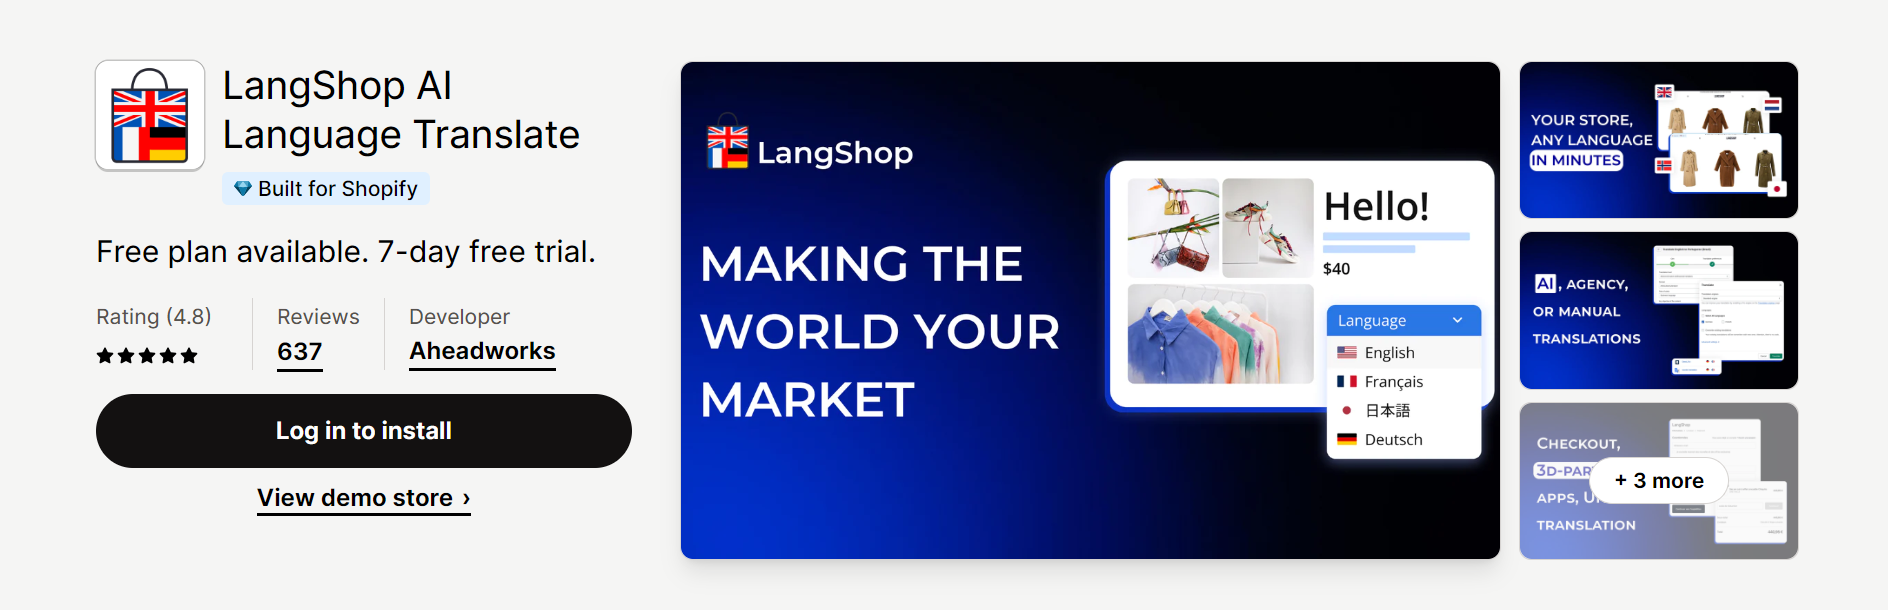 LangShop AI Language Translate